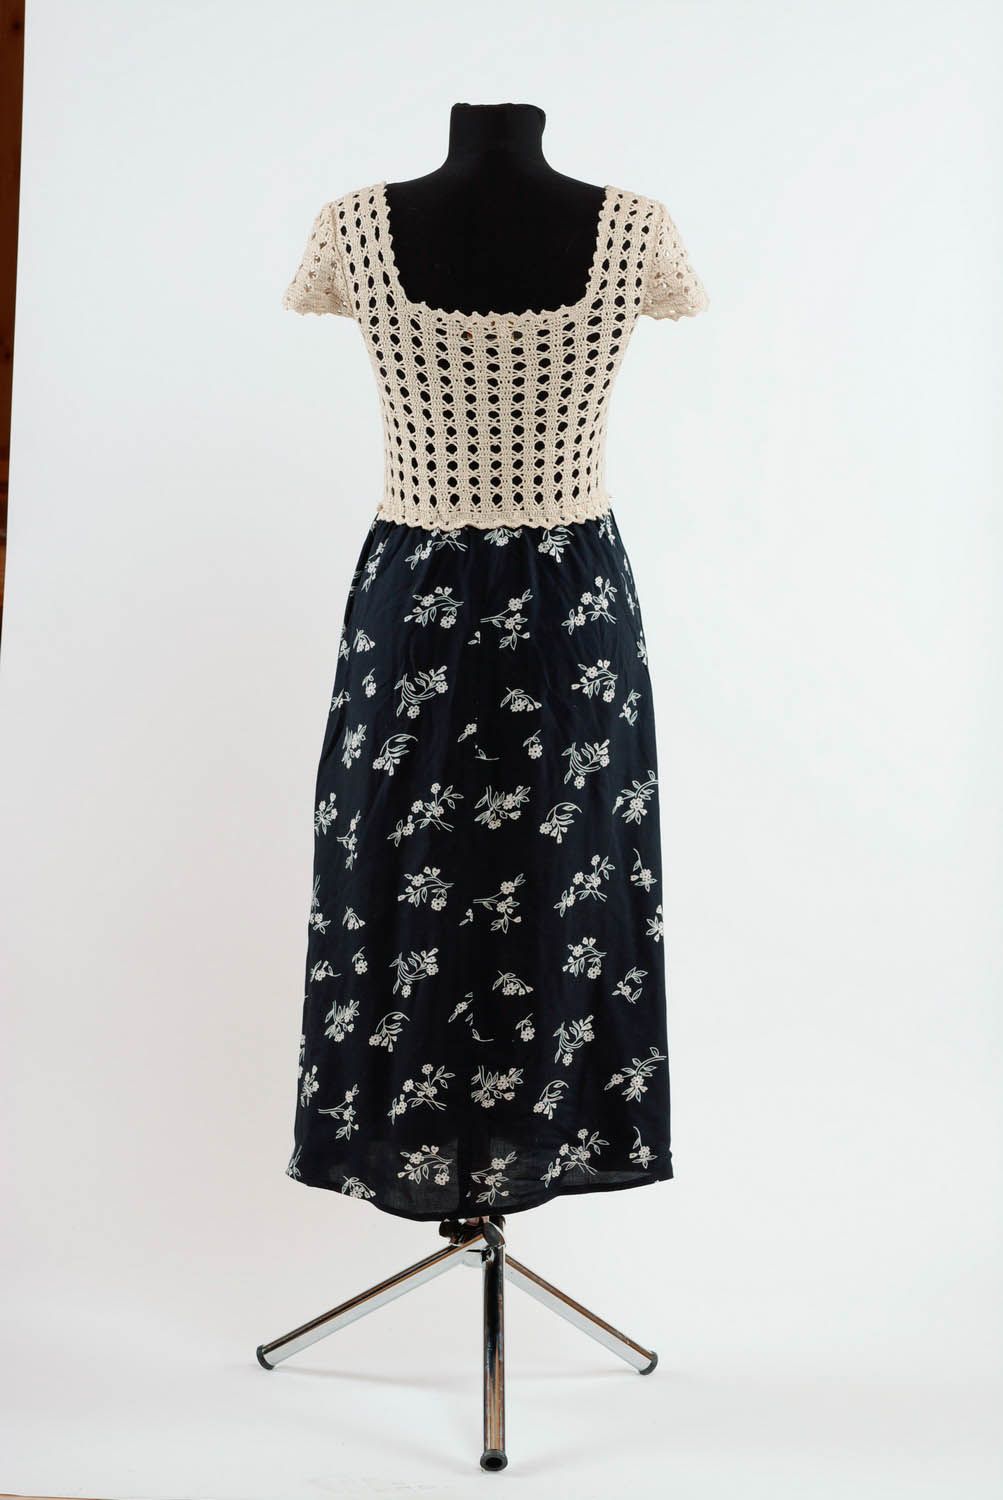 Crocheted dress photo 4